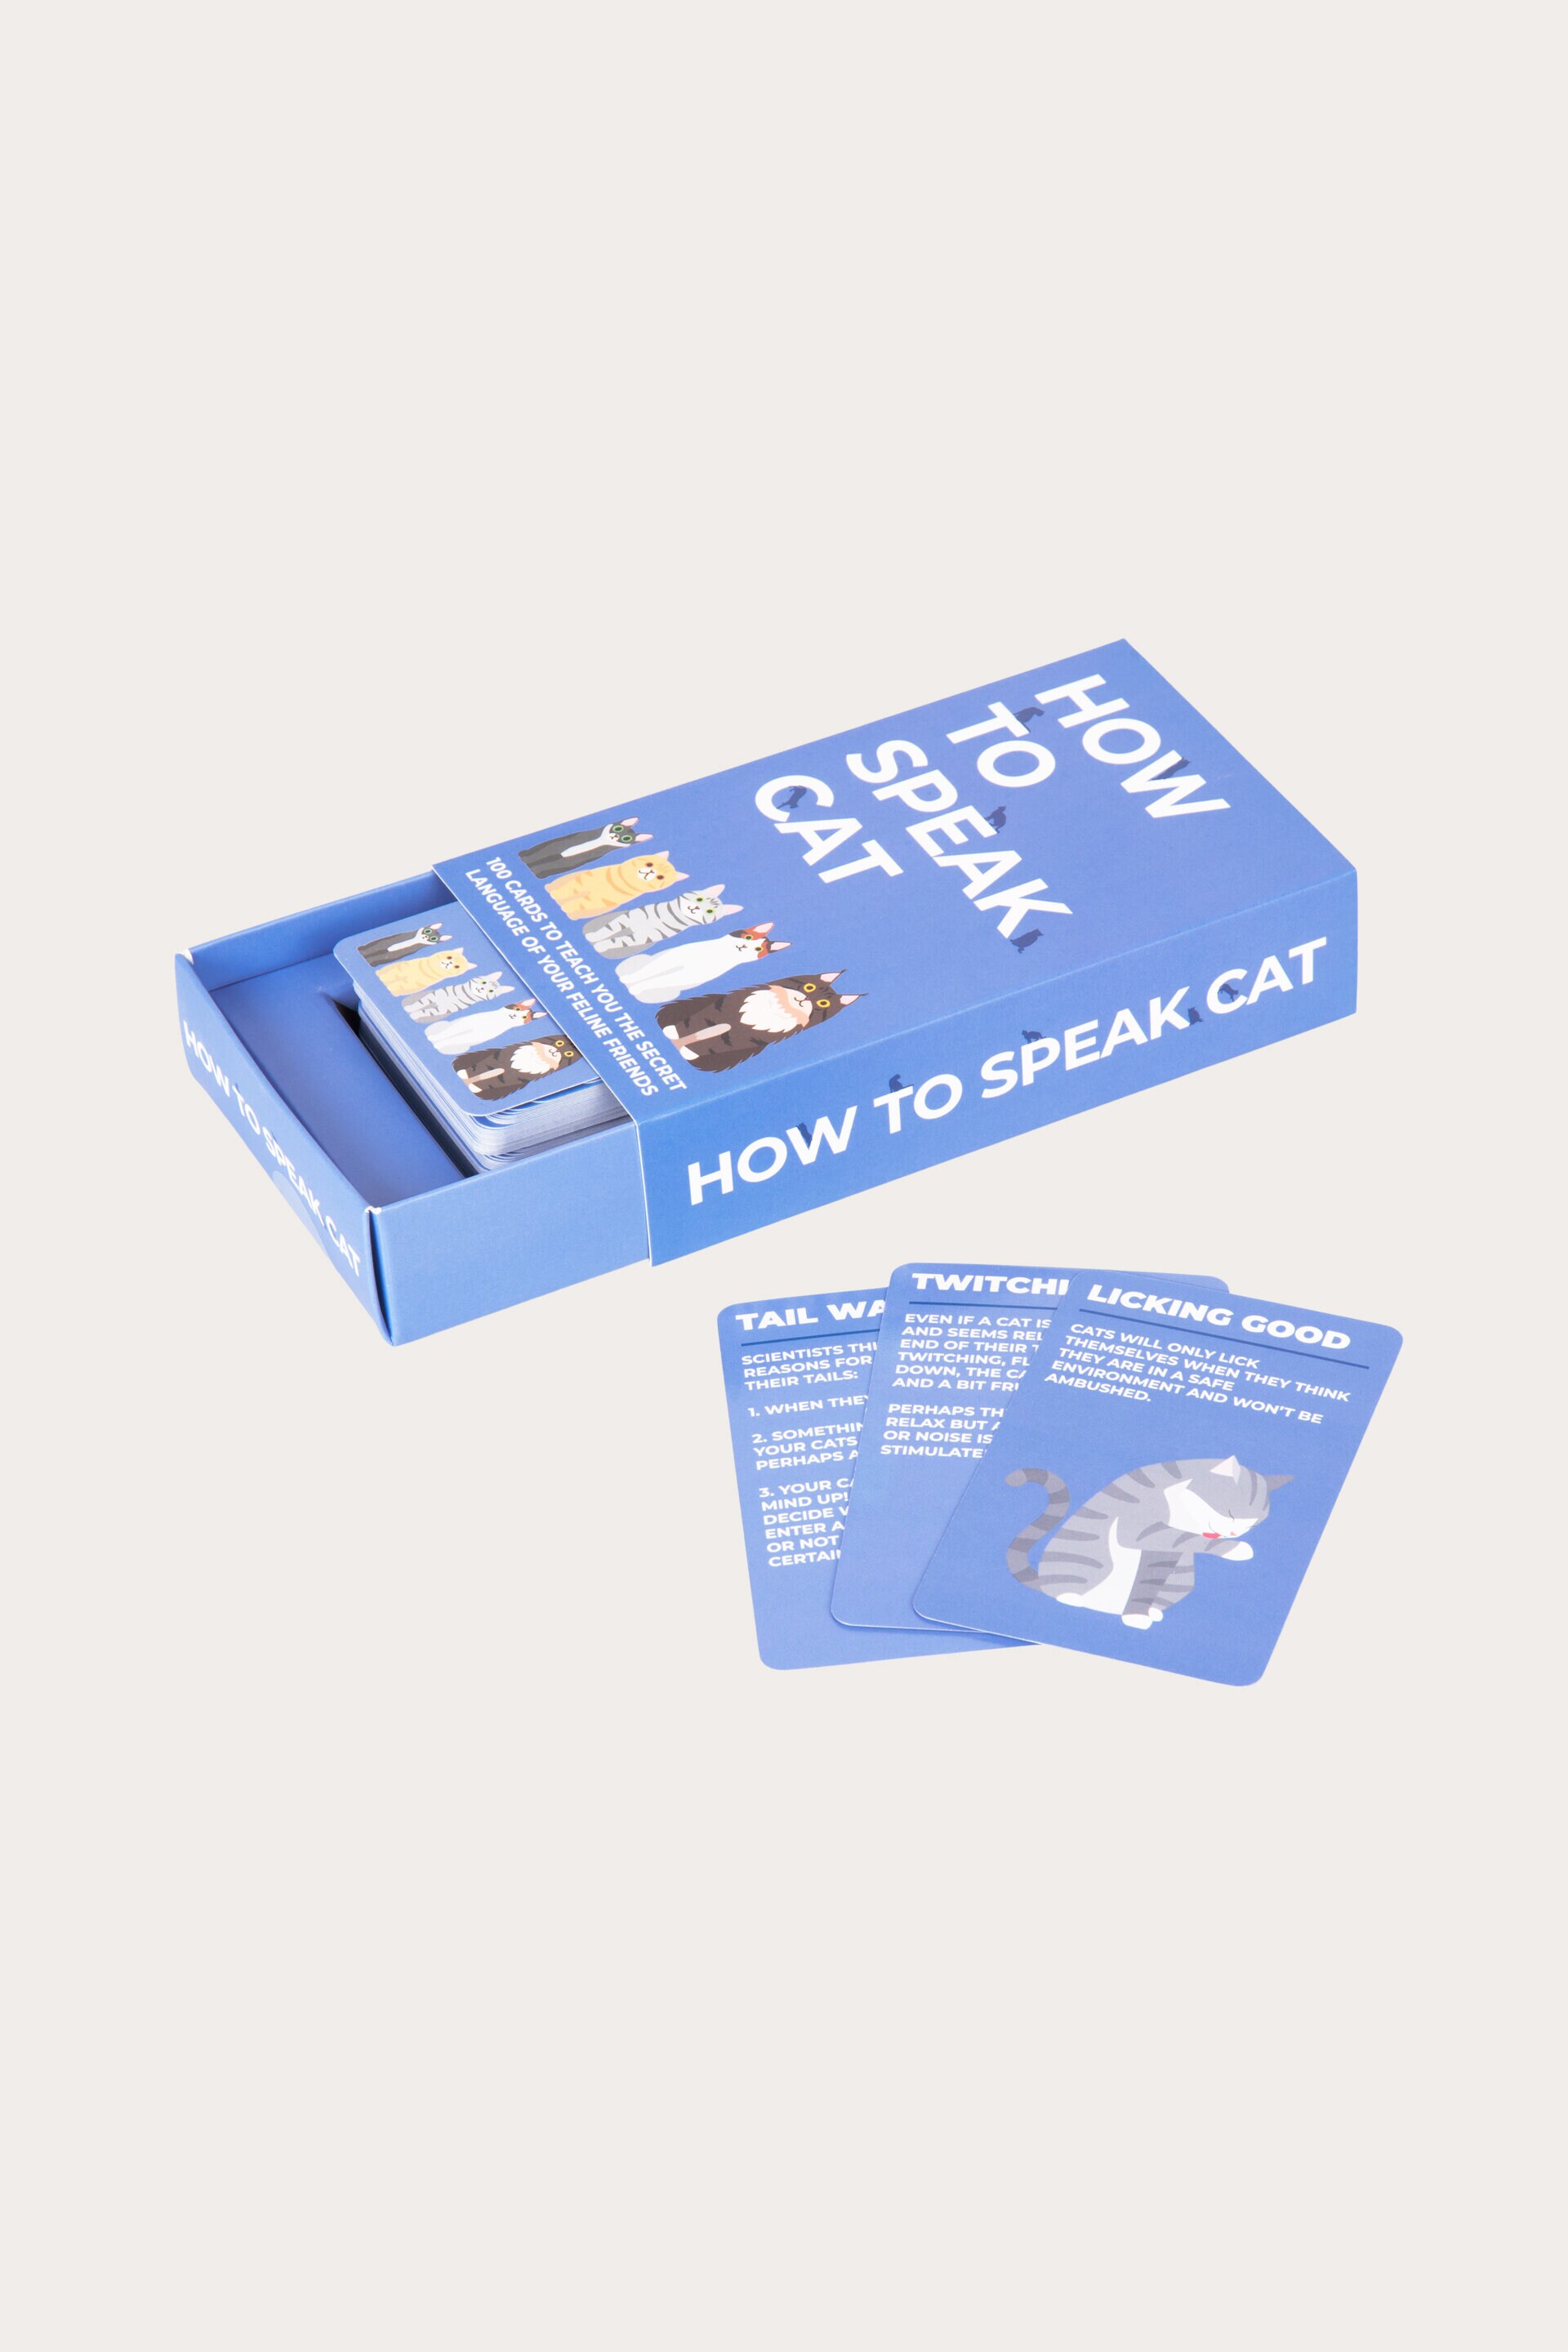 kort HOW TO SPEAK CAT